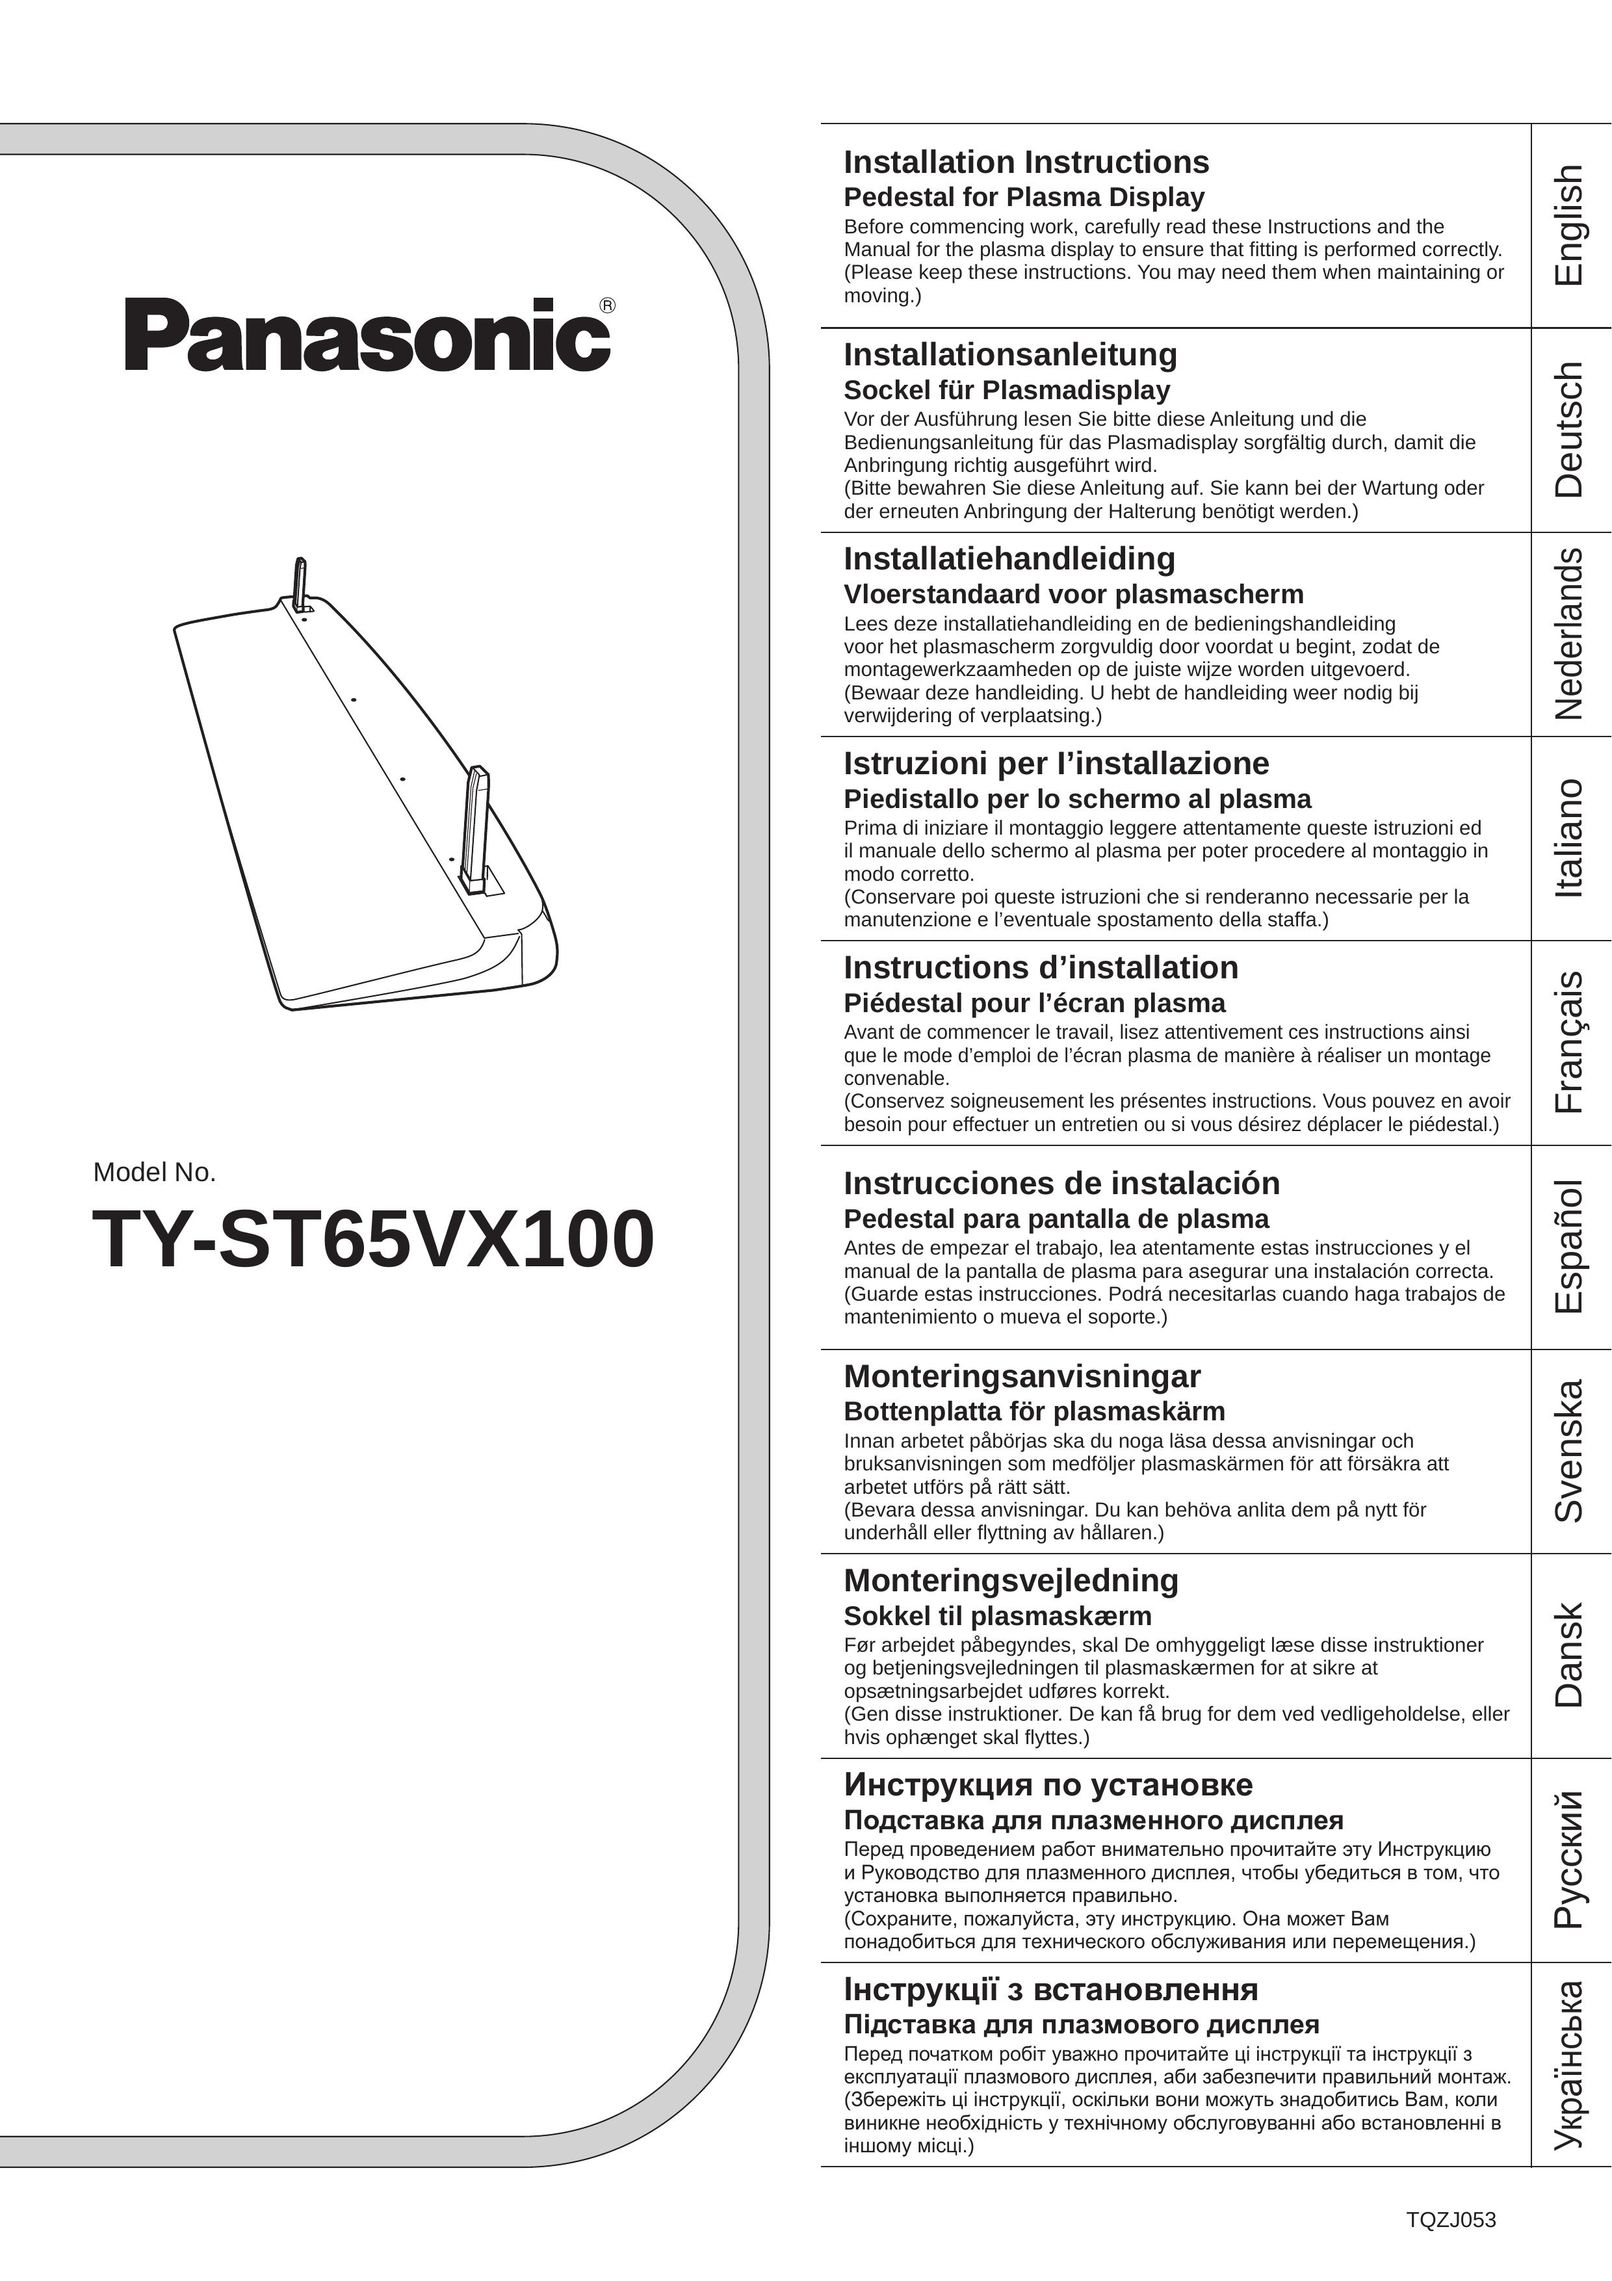 Panasonic TY-ST65VX100 TV Video Accessories User Manual